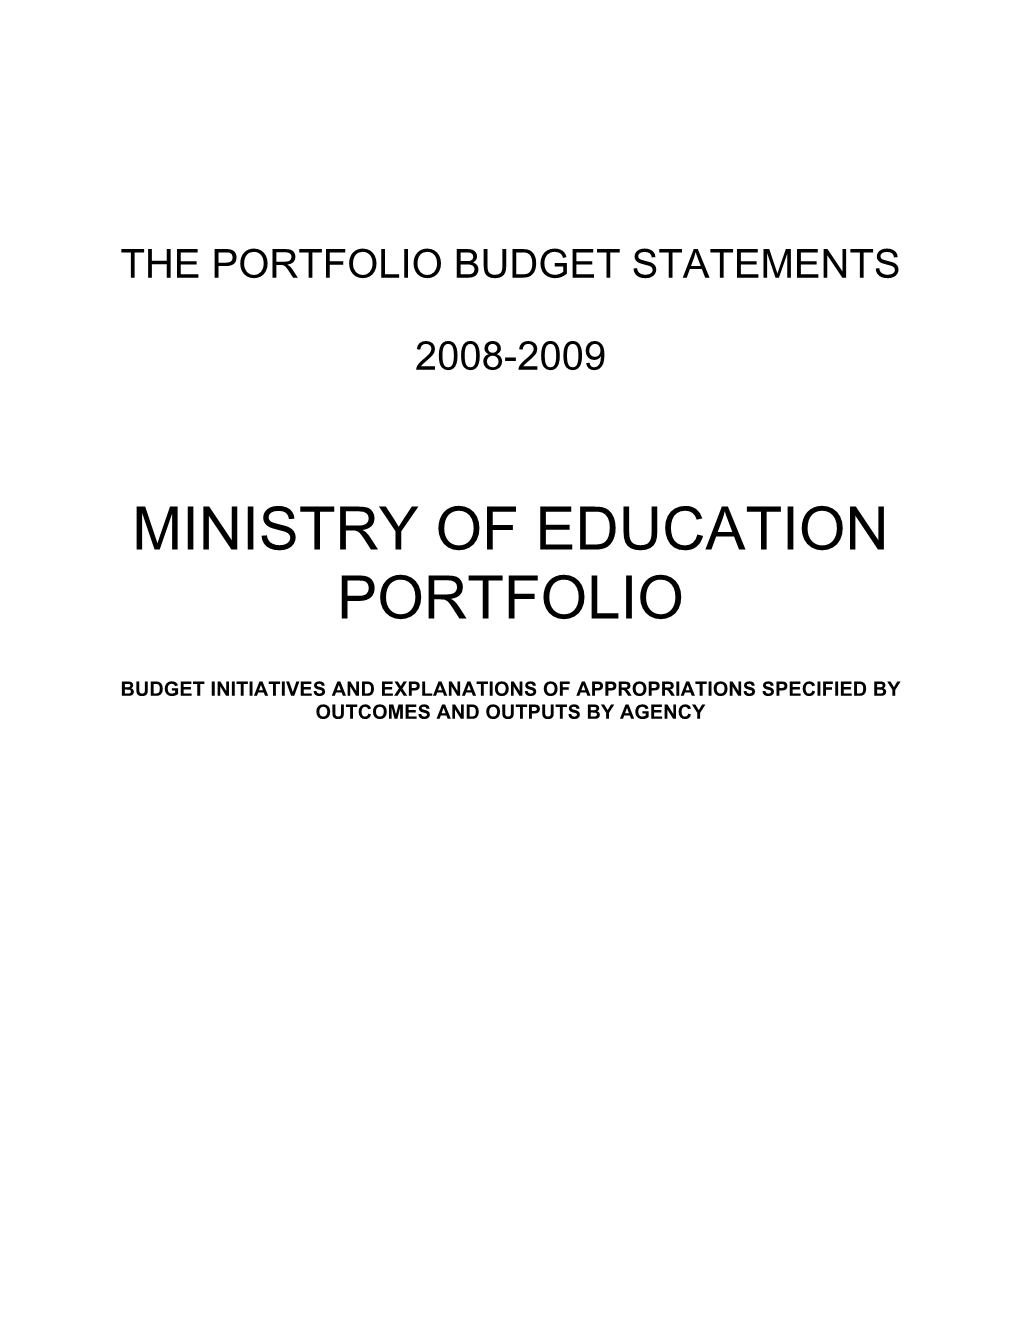 The Portfolio Budget Statements